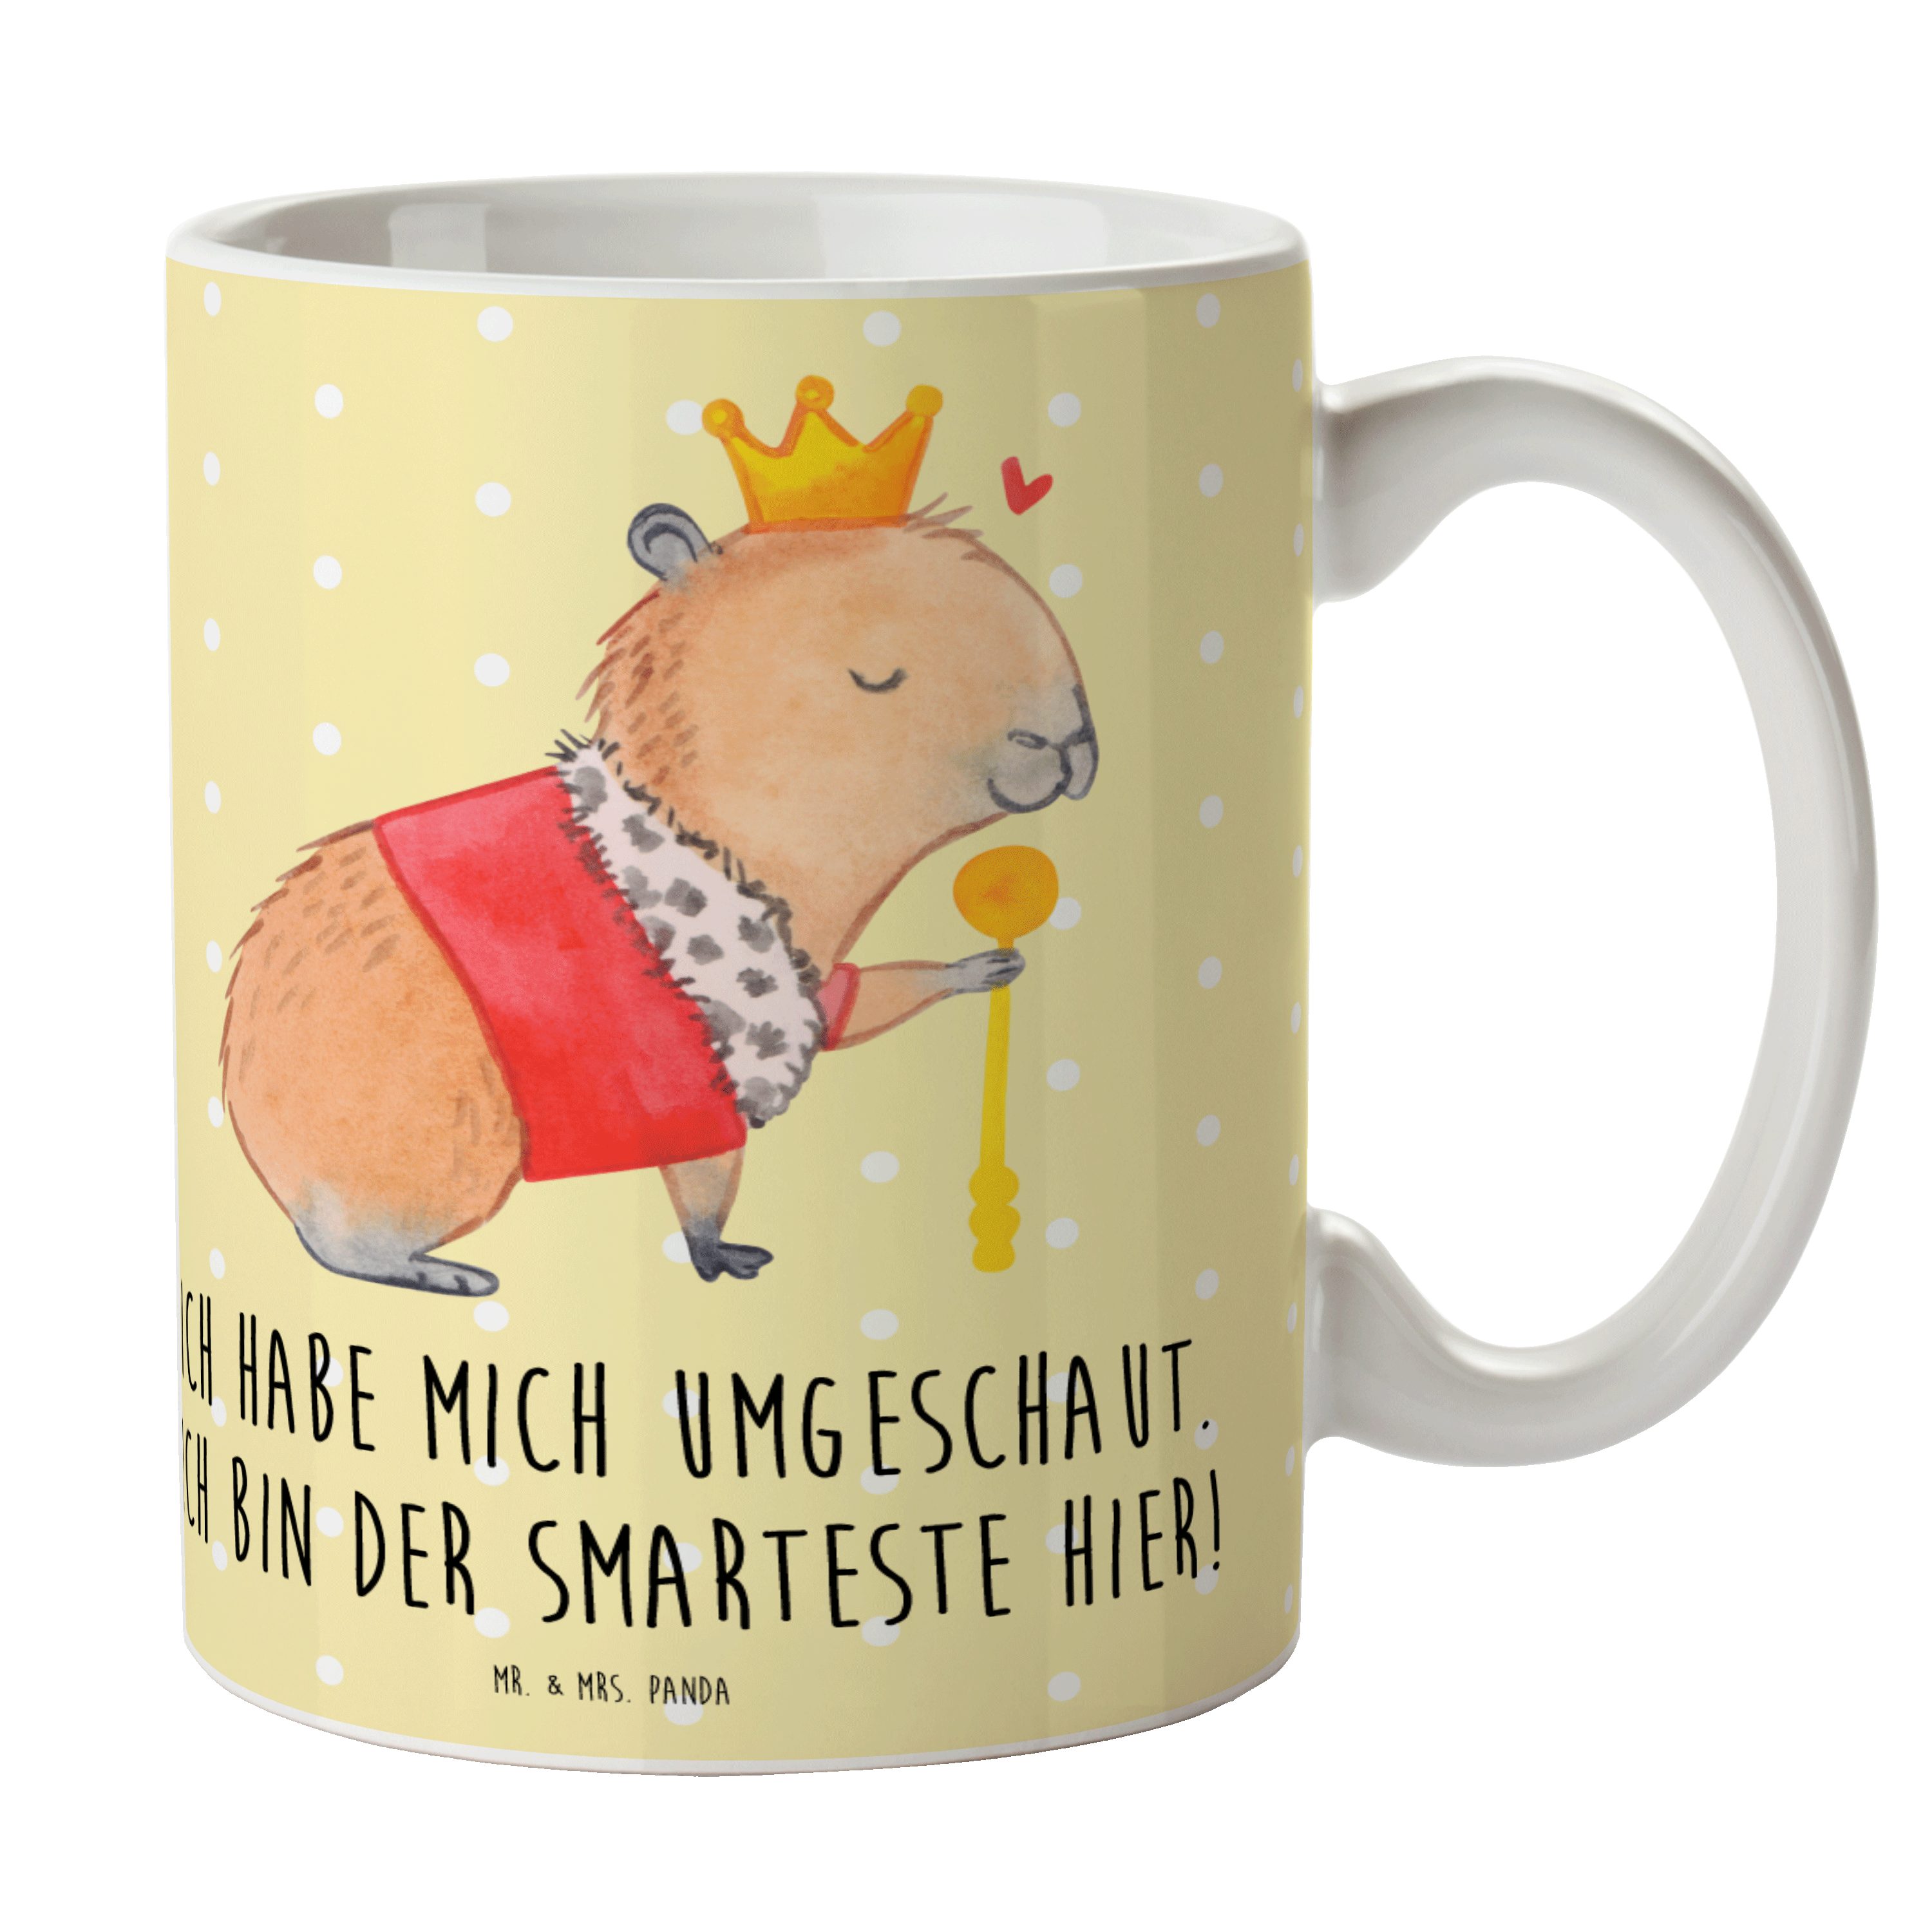 Mr. & Mrs. Panda Tasse Capybara König - Gelb Pastell - Geschenk, Keramiktasse, lustige Sprüc, Keramik